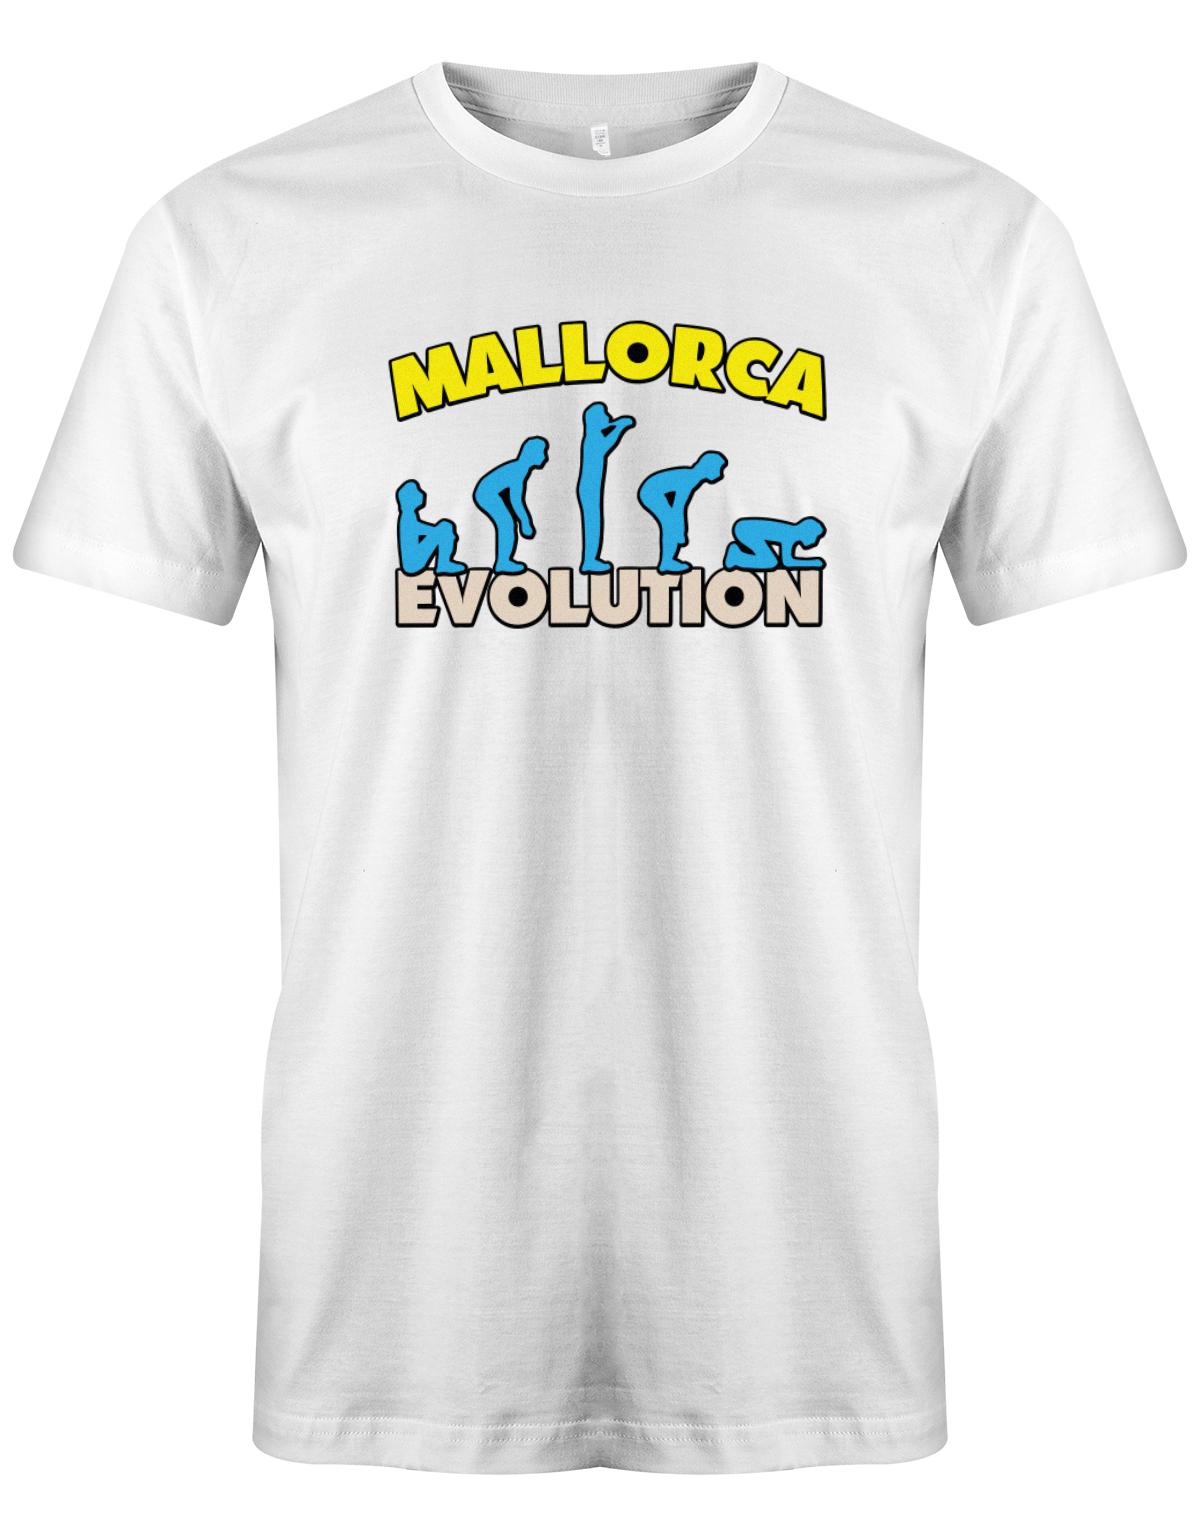 Mallorca-Evolution-Urlaub-Herren-Shirt-weiss